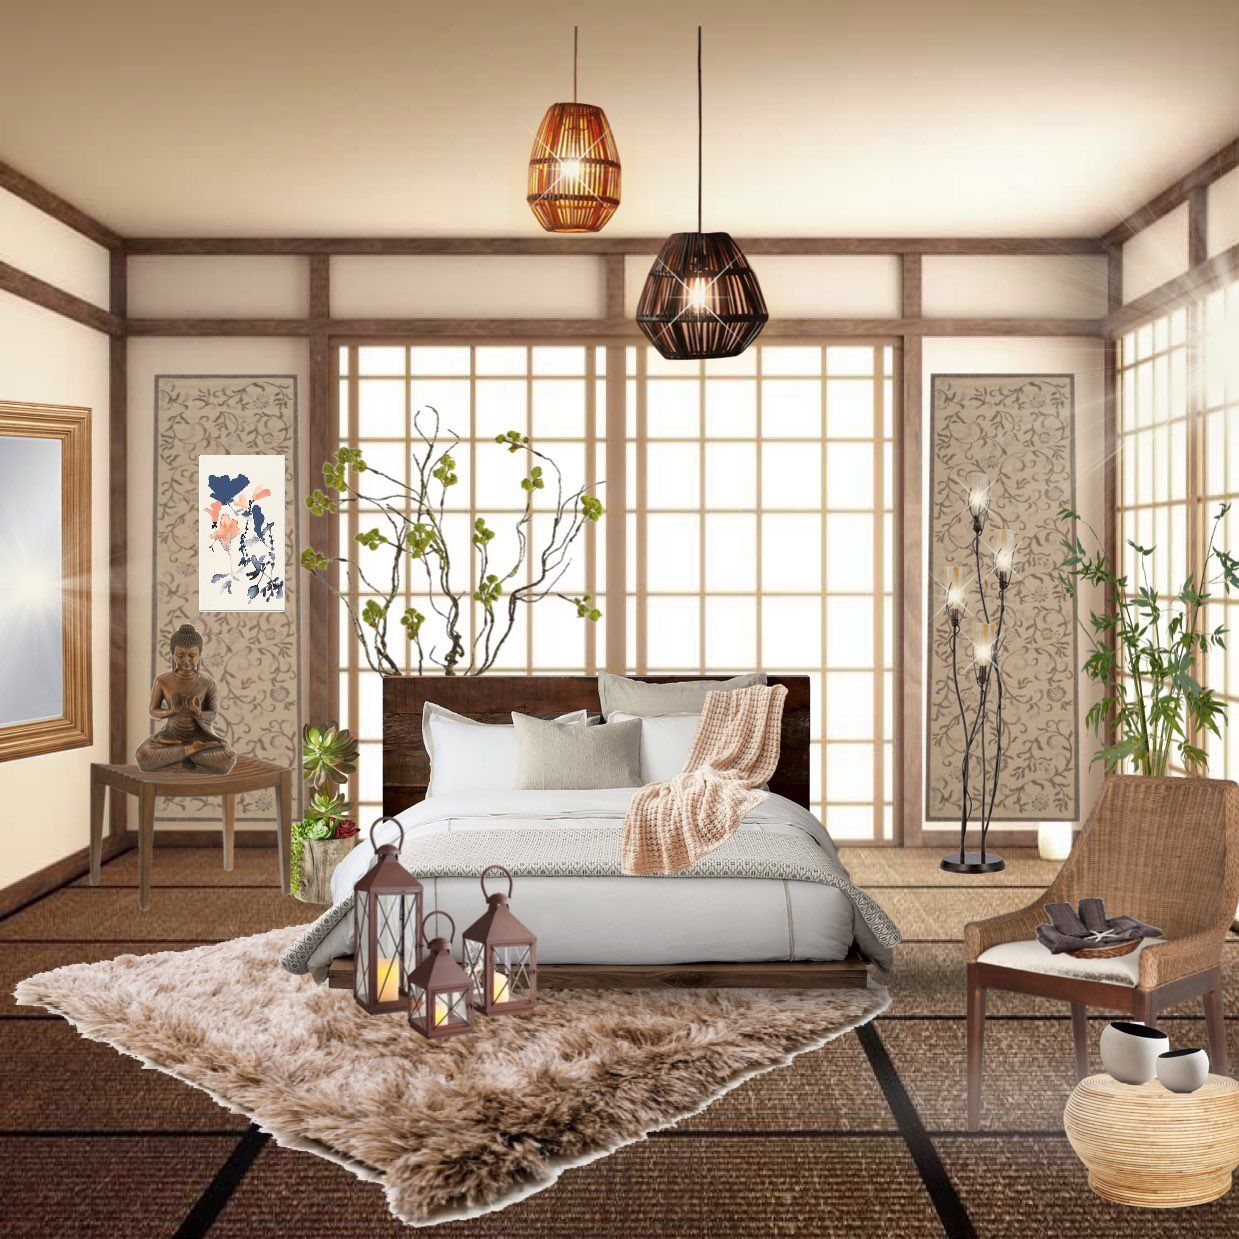 Japanese Zen Bedroom Design for Tranquility